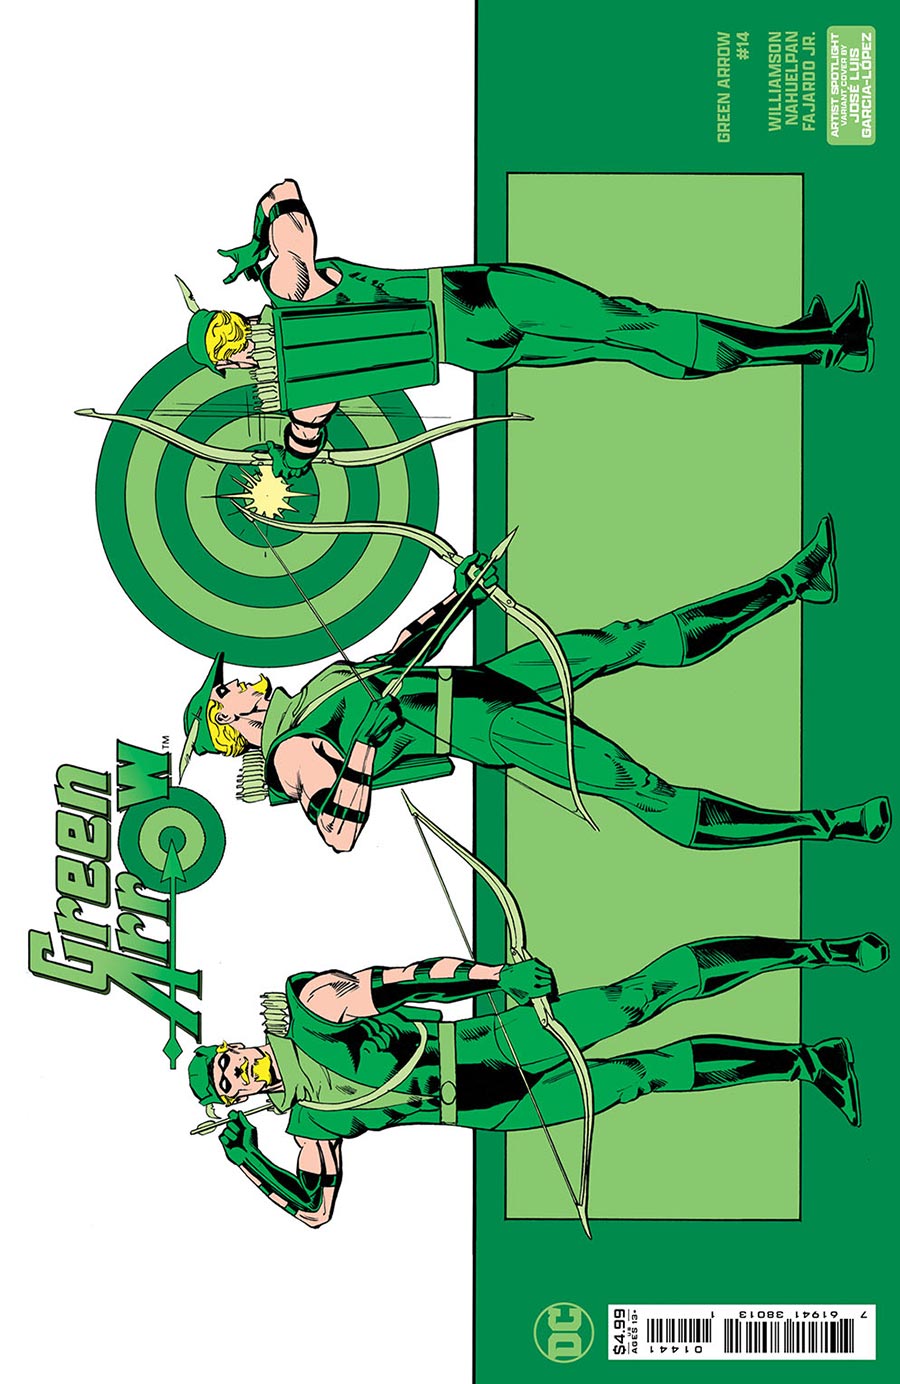 Green Arrow Vol 8 #14 Cover C Variant Jose Luis Garcia-Lopez Artist Spotlight Wraparound Card Stock Cover (Absolute Power Tie-In)